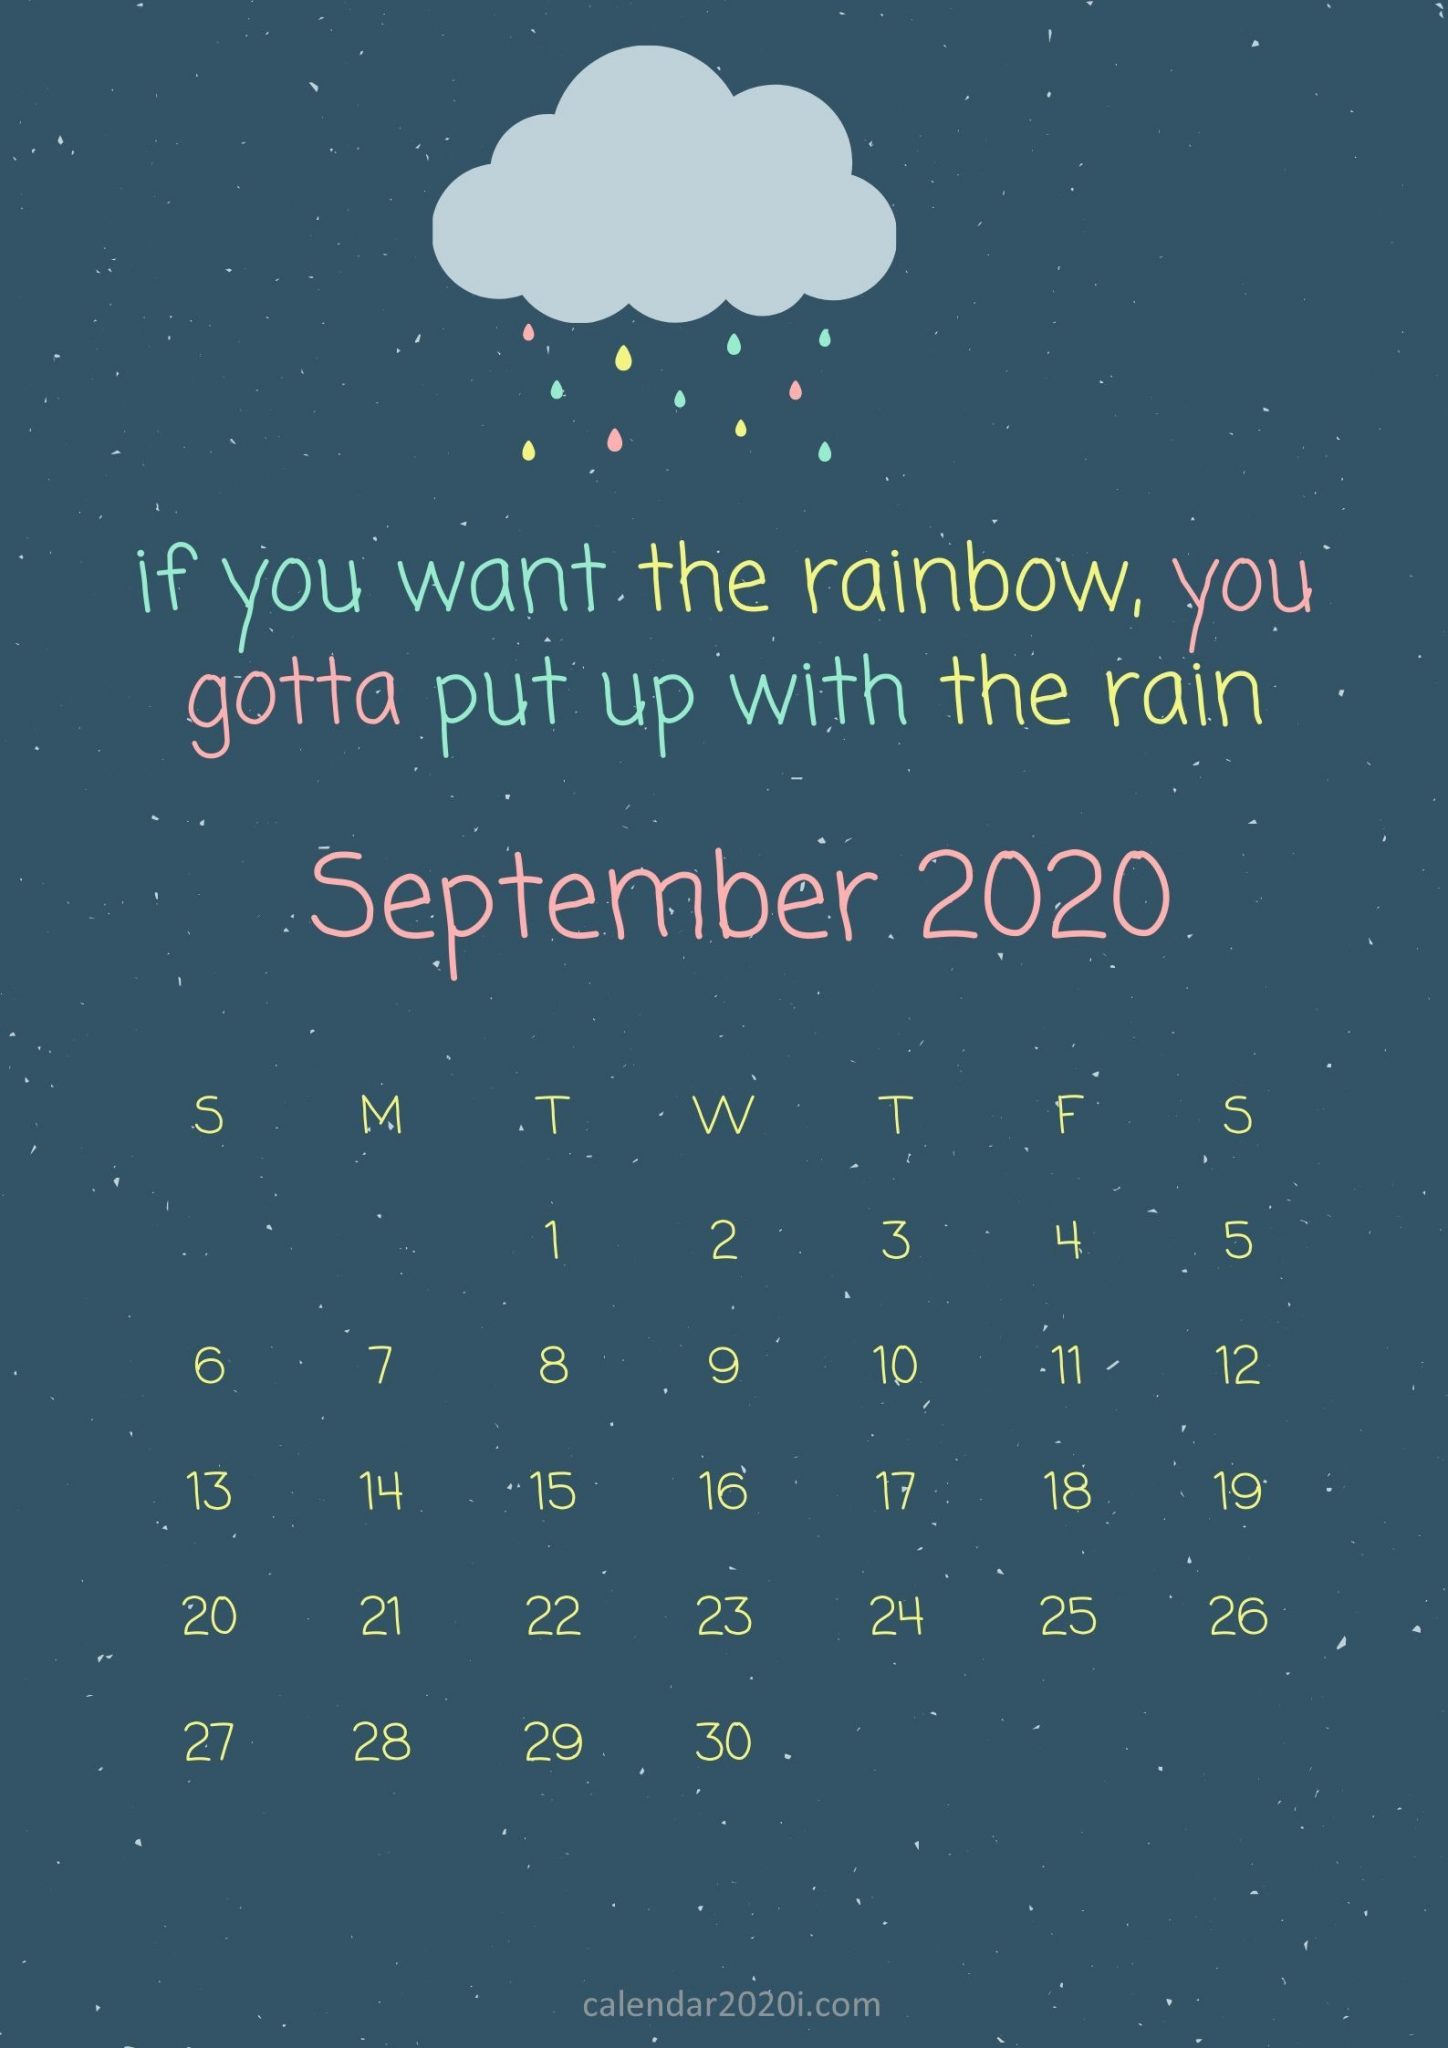 Inspirational September 2020 Calendar